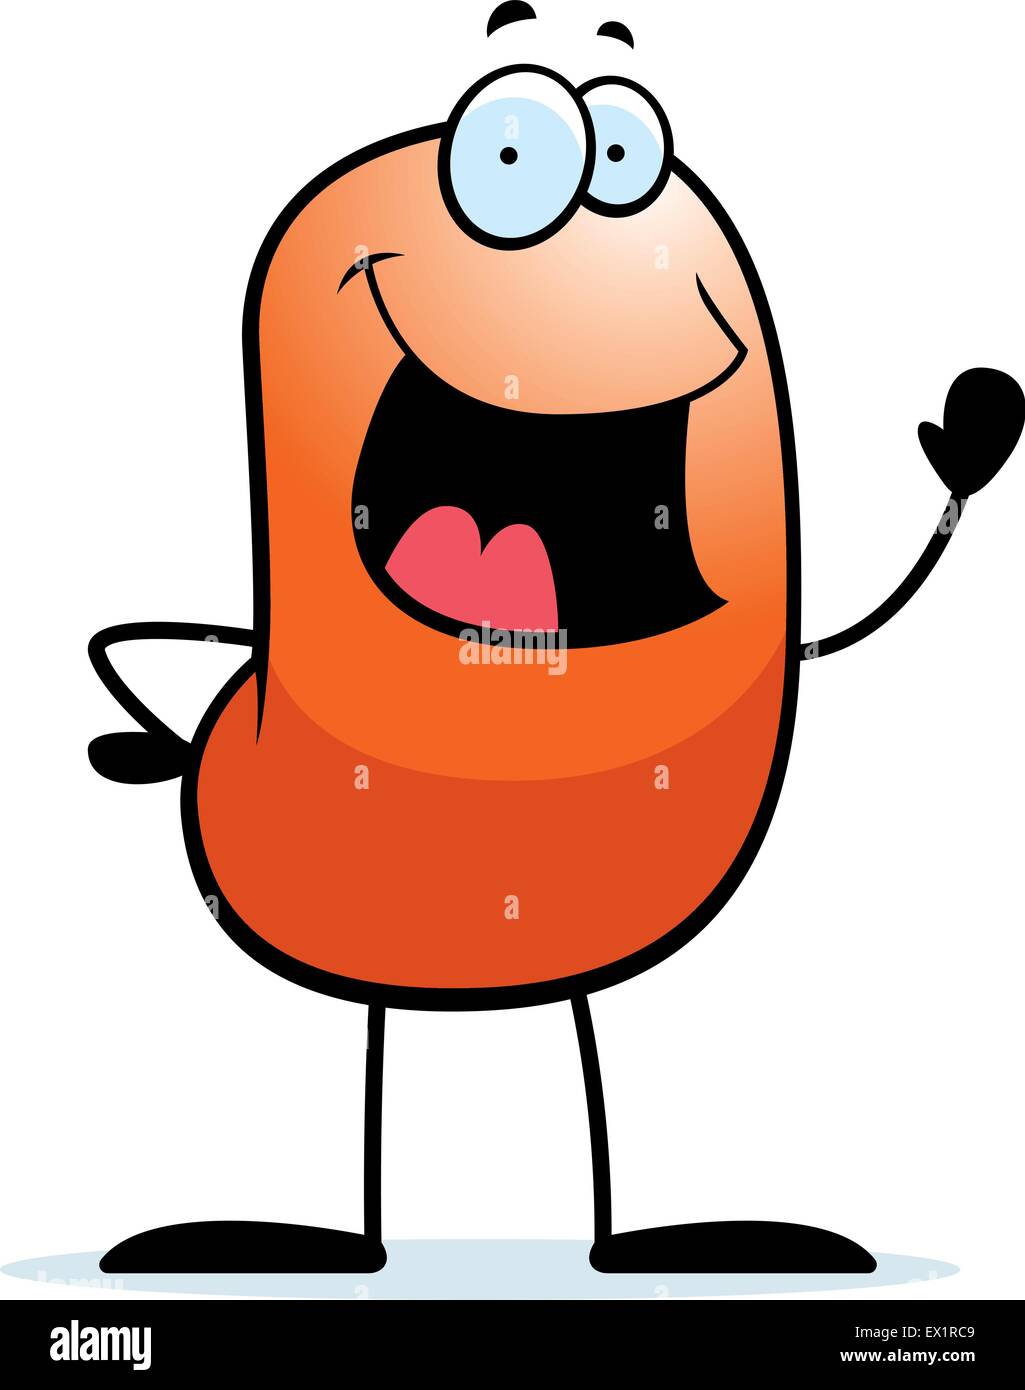 A happy cartoon jelly bean waving and smiling. Stock Vector